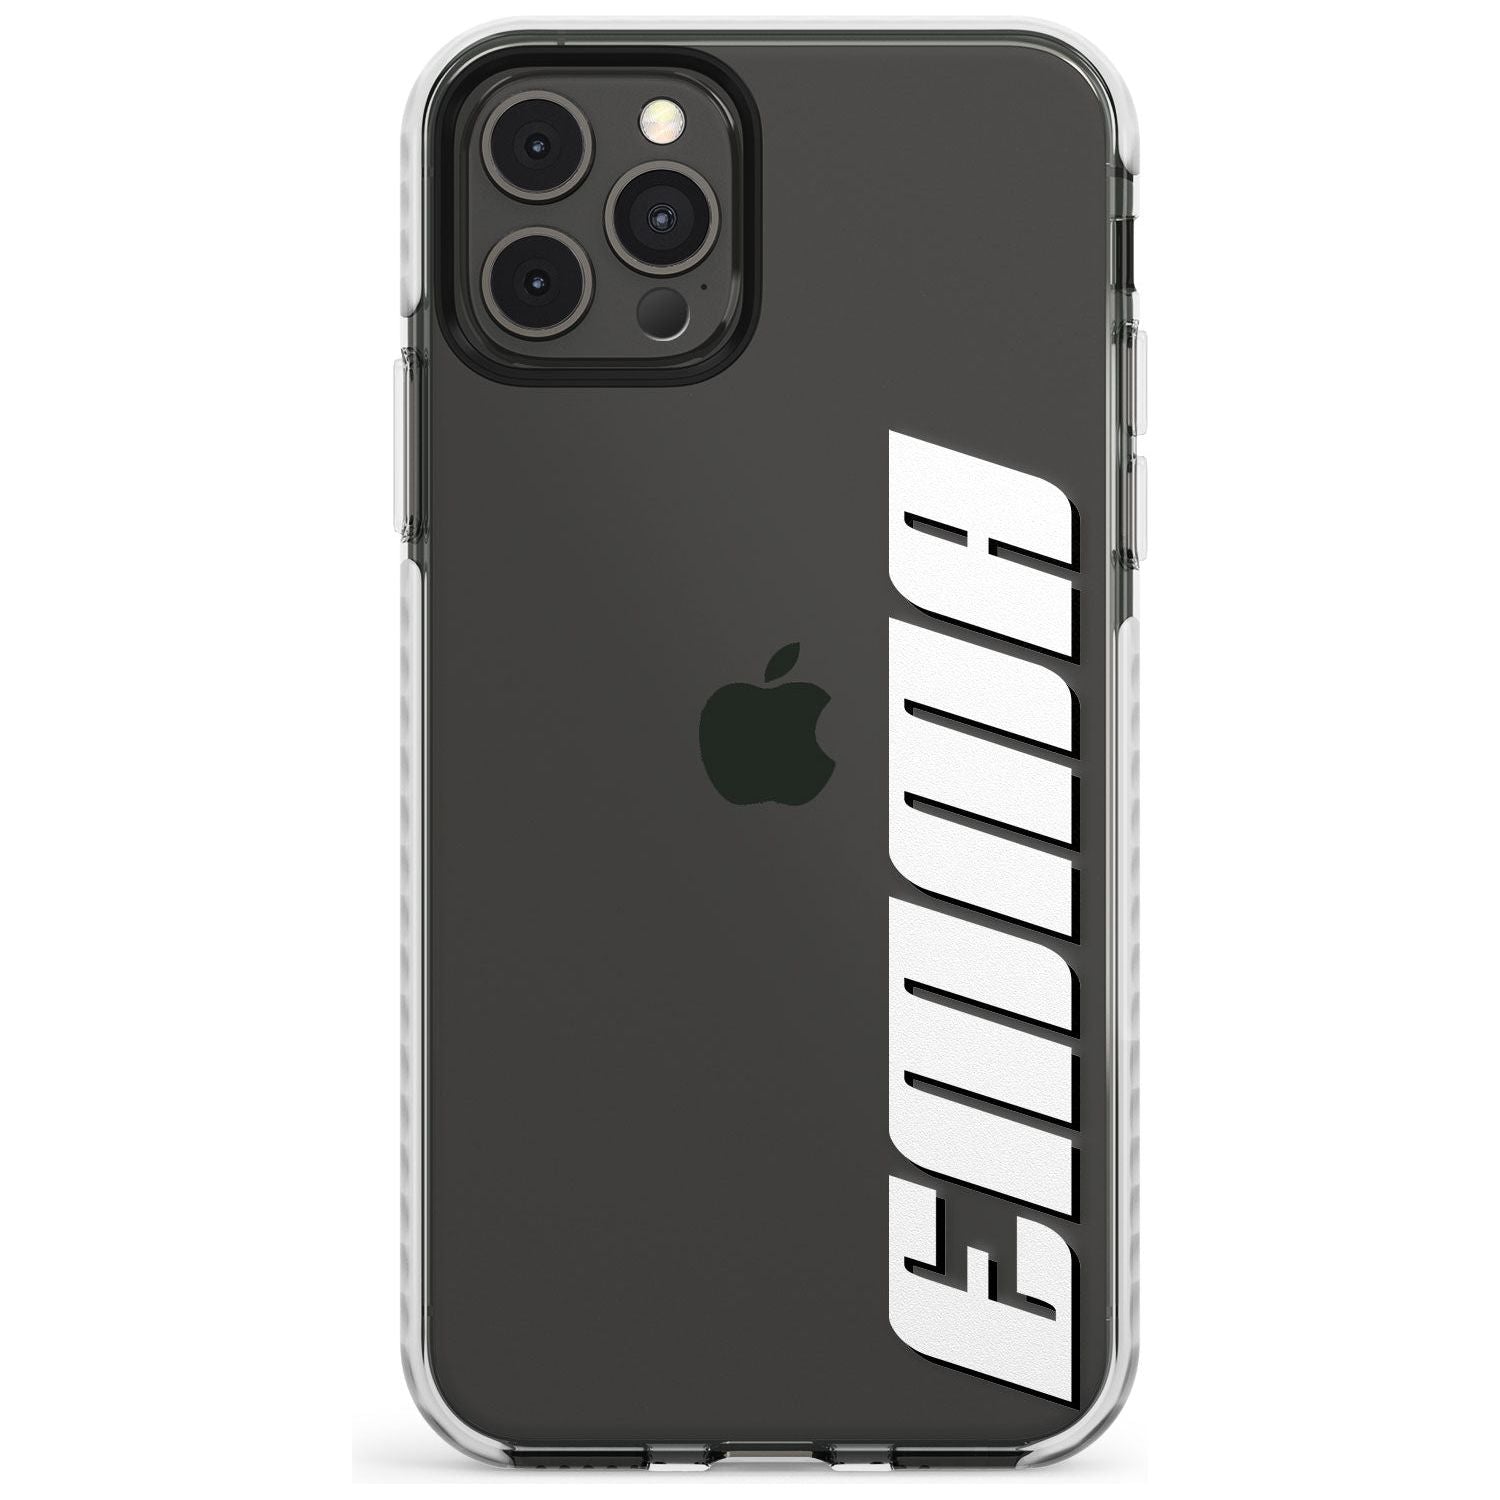 Custom Iphone Case 4B Slim TPU Phone Case for iPhone 11 Pro Max